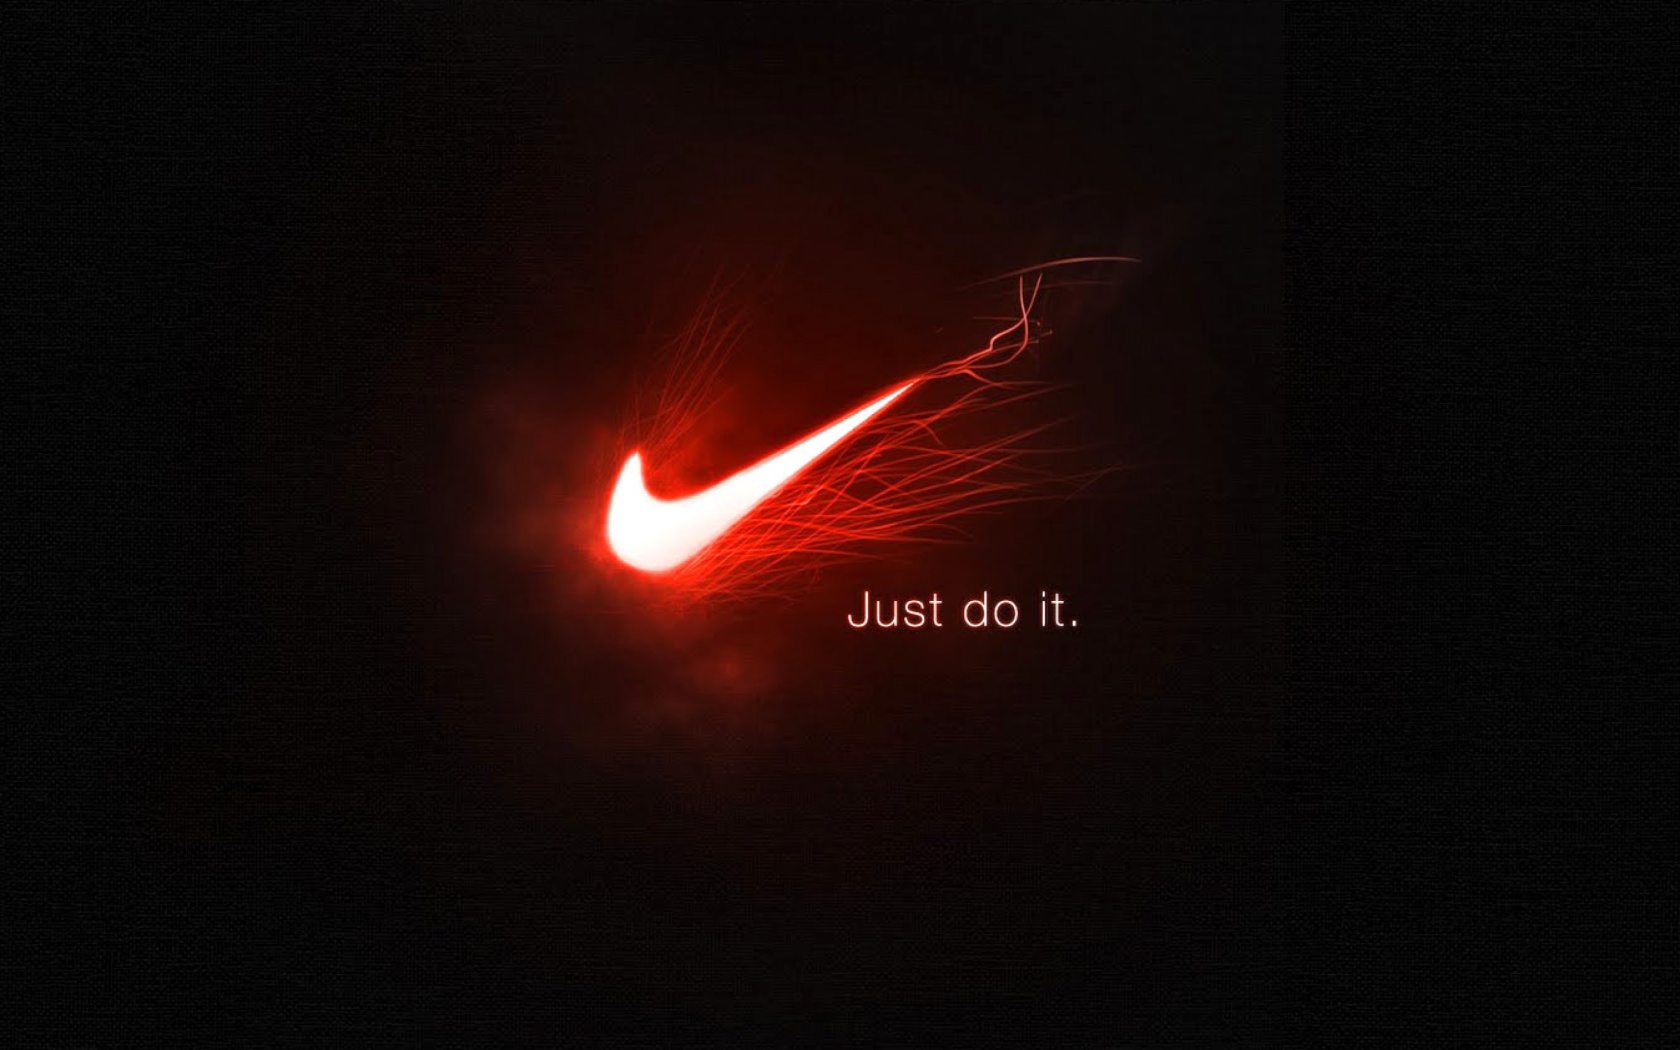 Обои Nike Advertising Slogan Just Do It 1680x1050